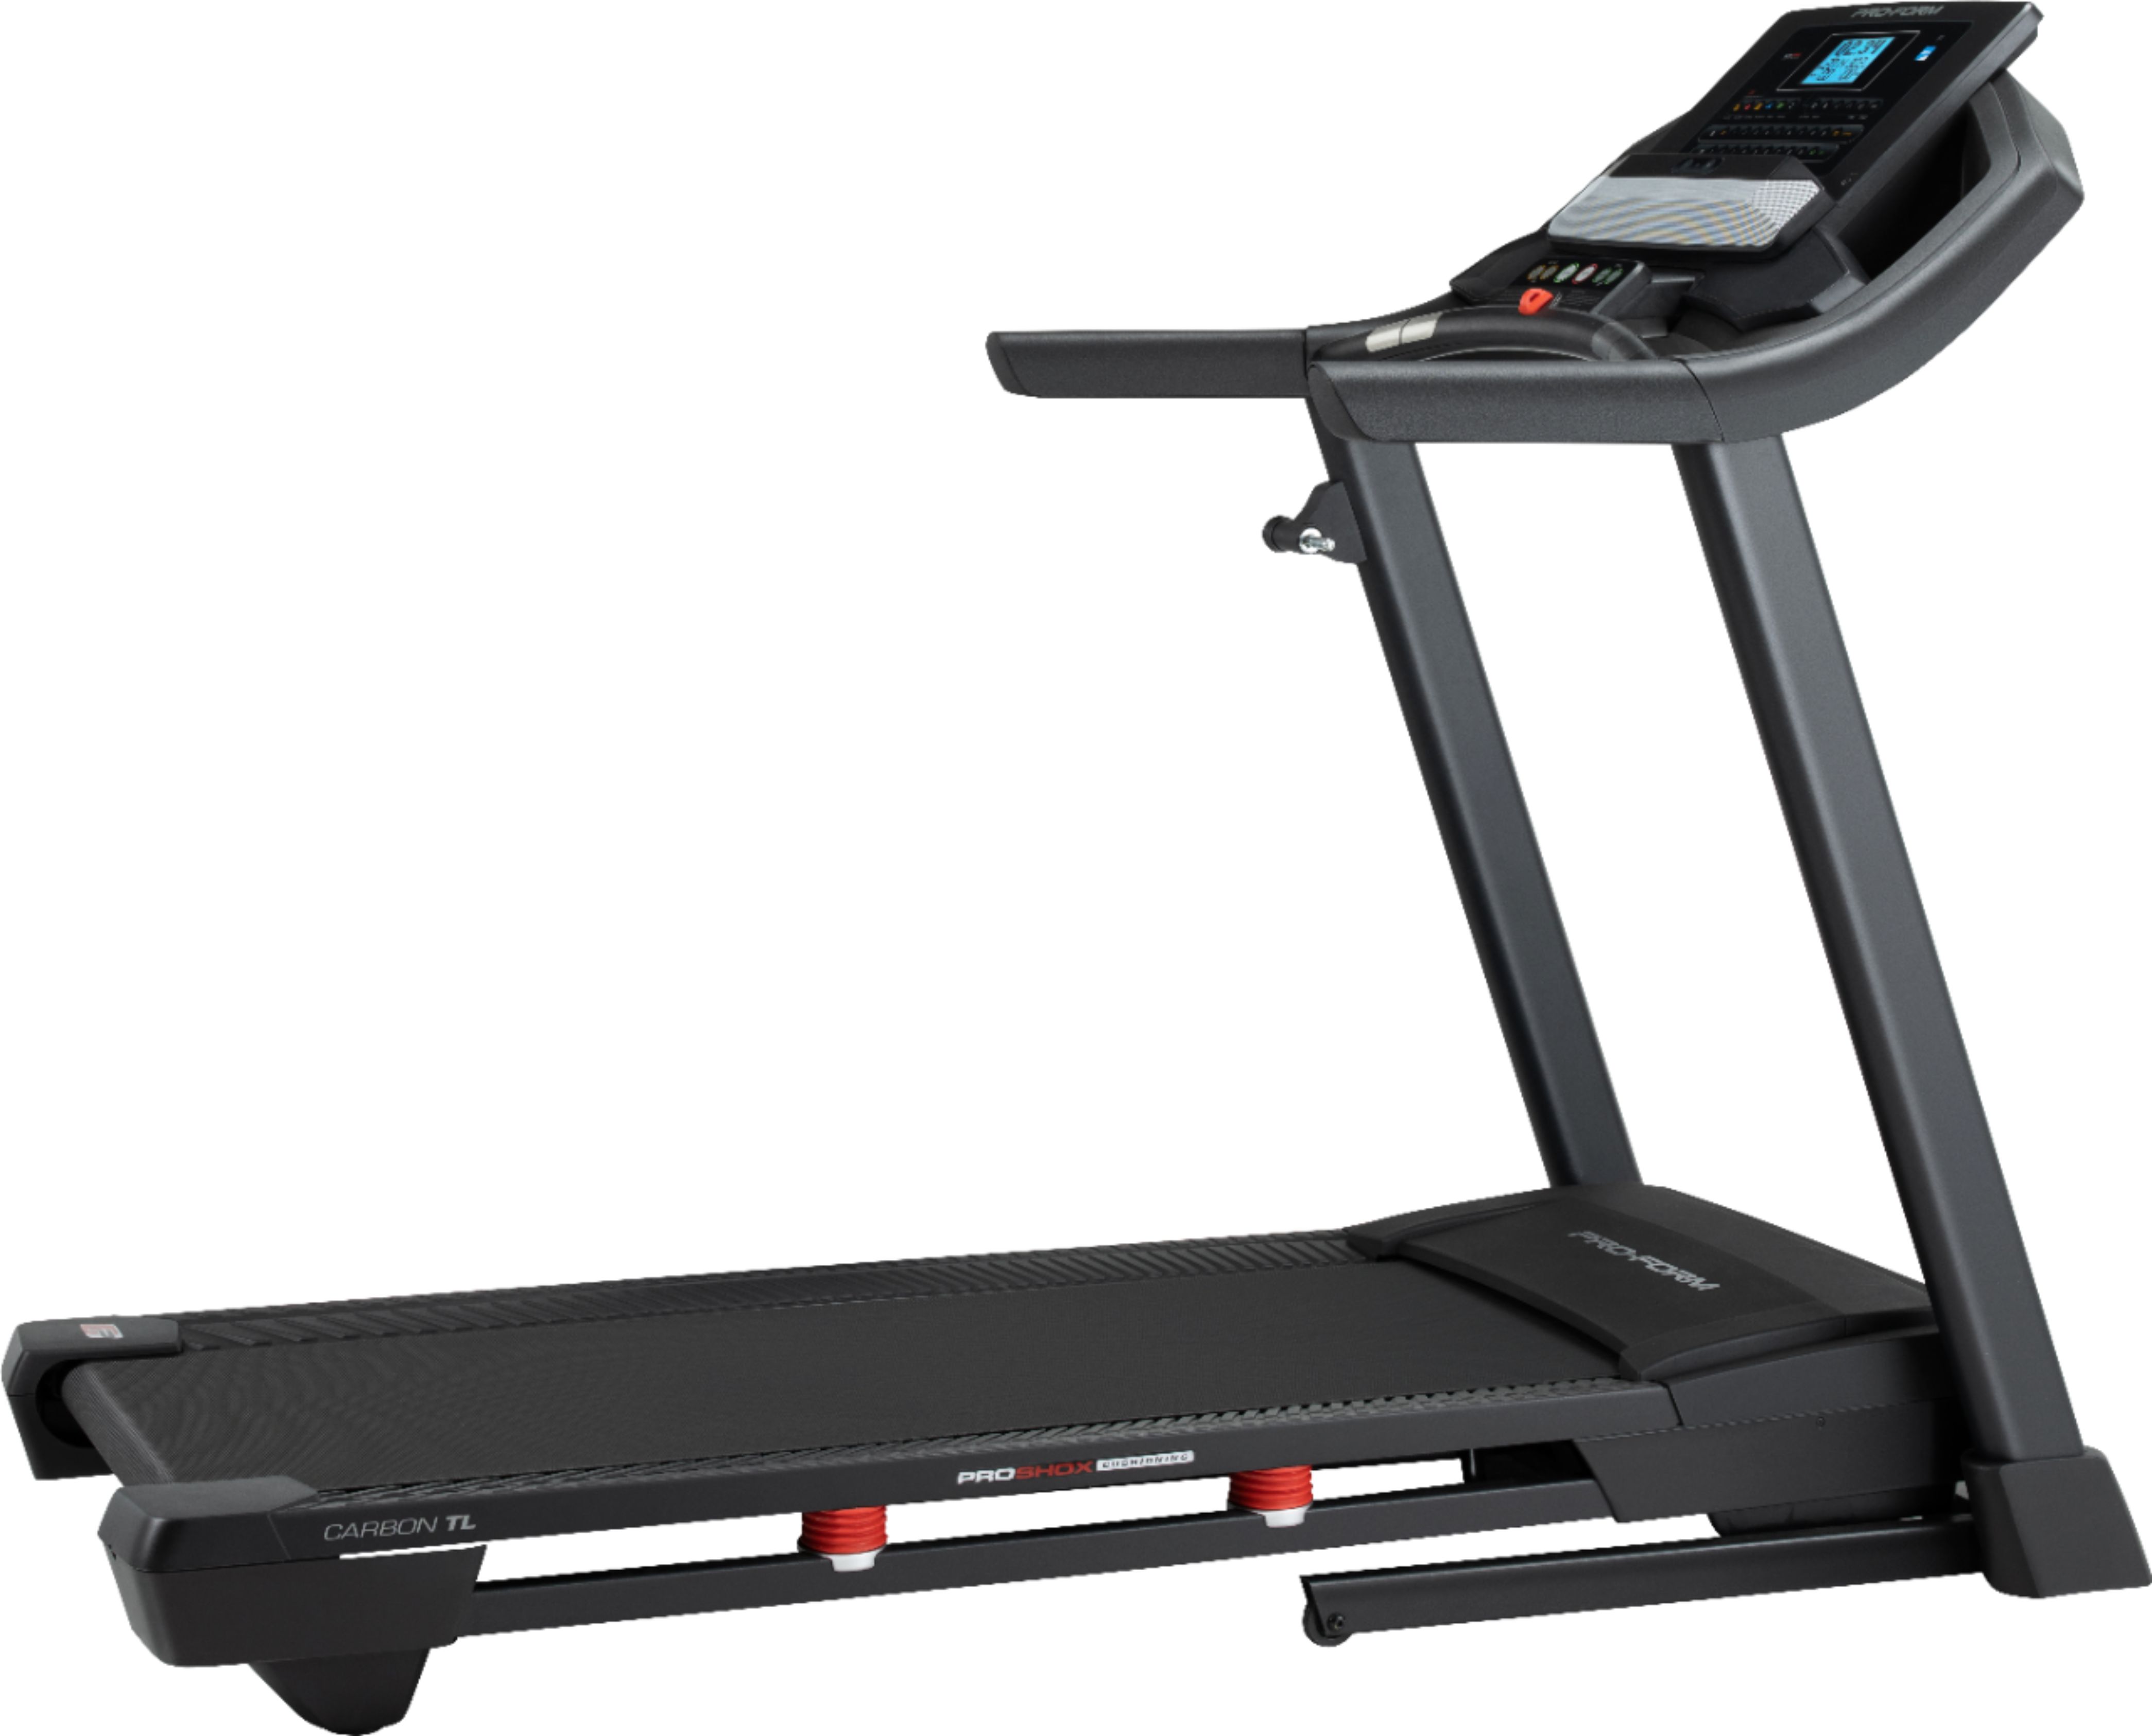 ProForm Carbon TL Smart Treadmill with 10% Incline Control, iFIT Compatible - Black